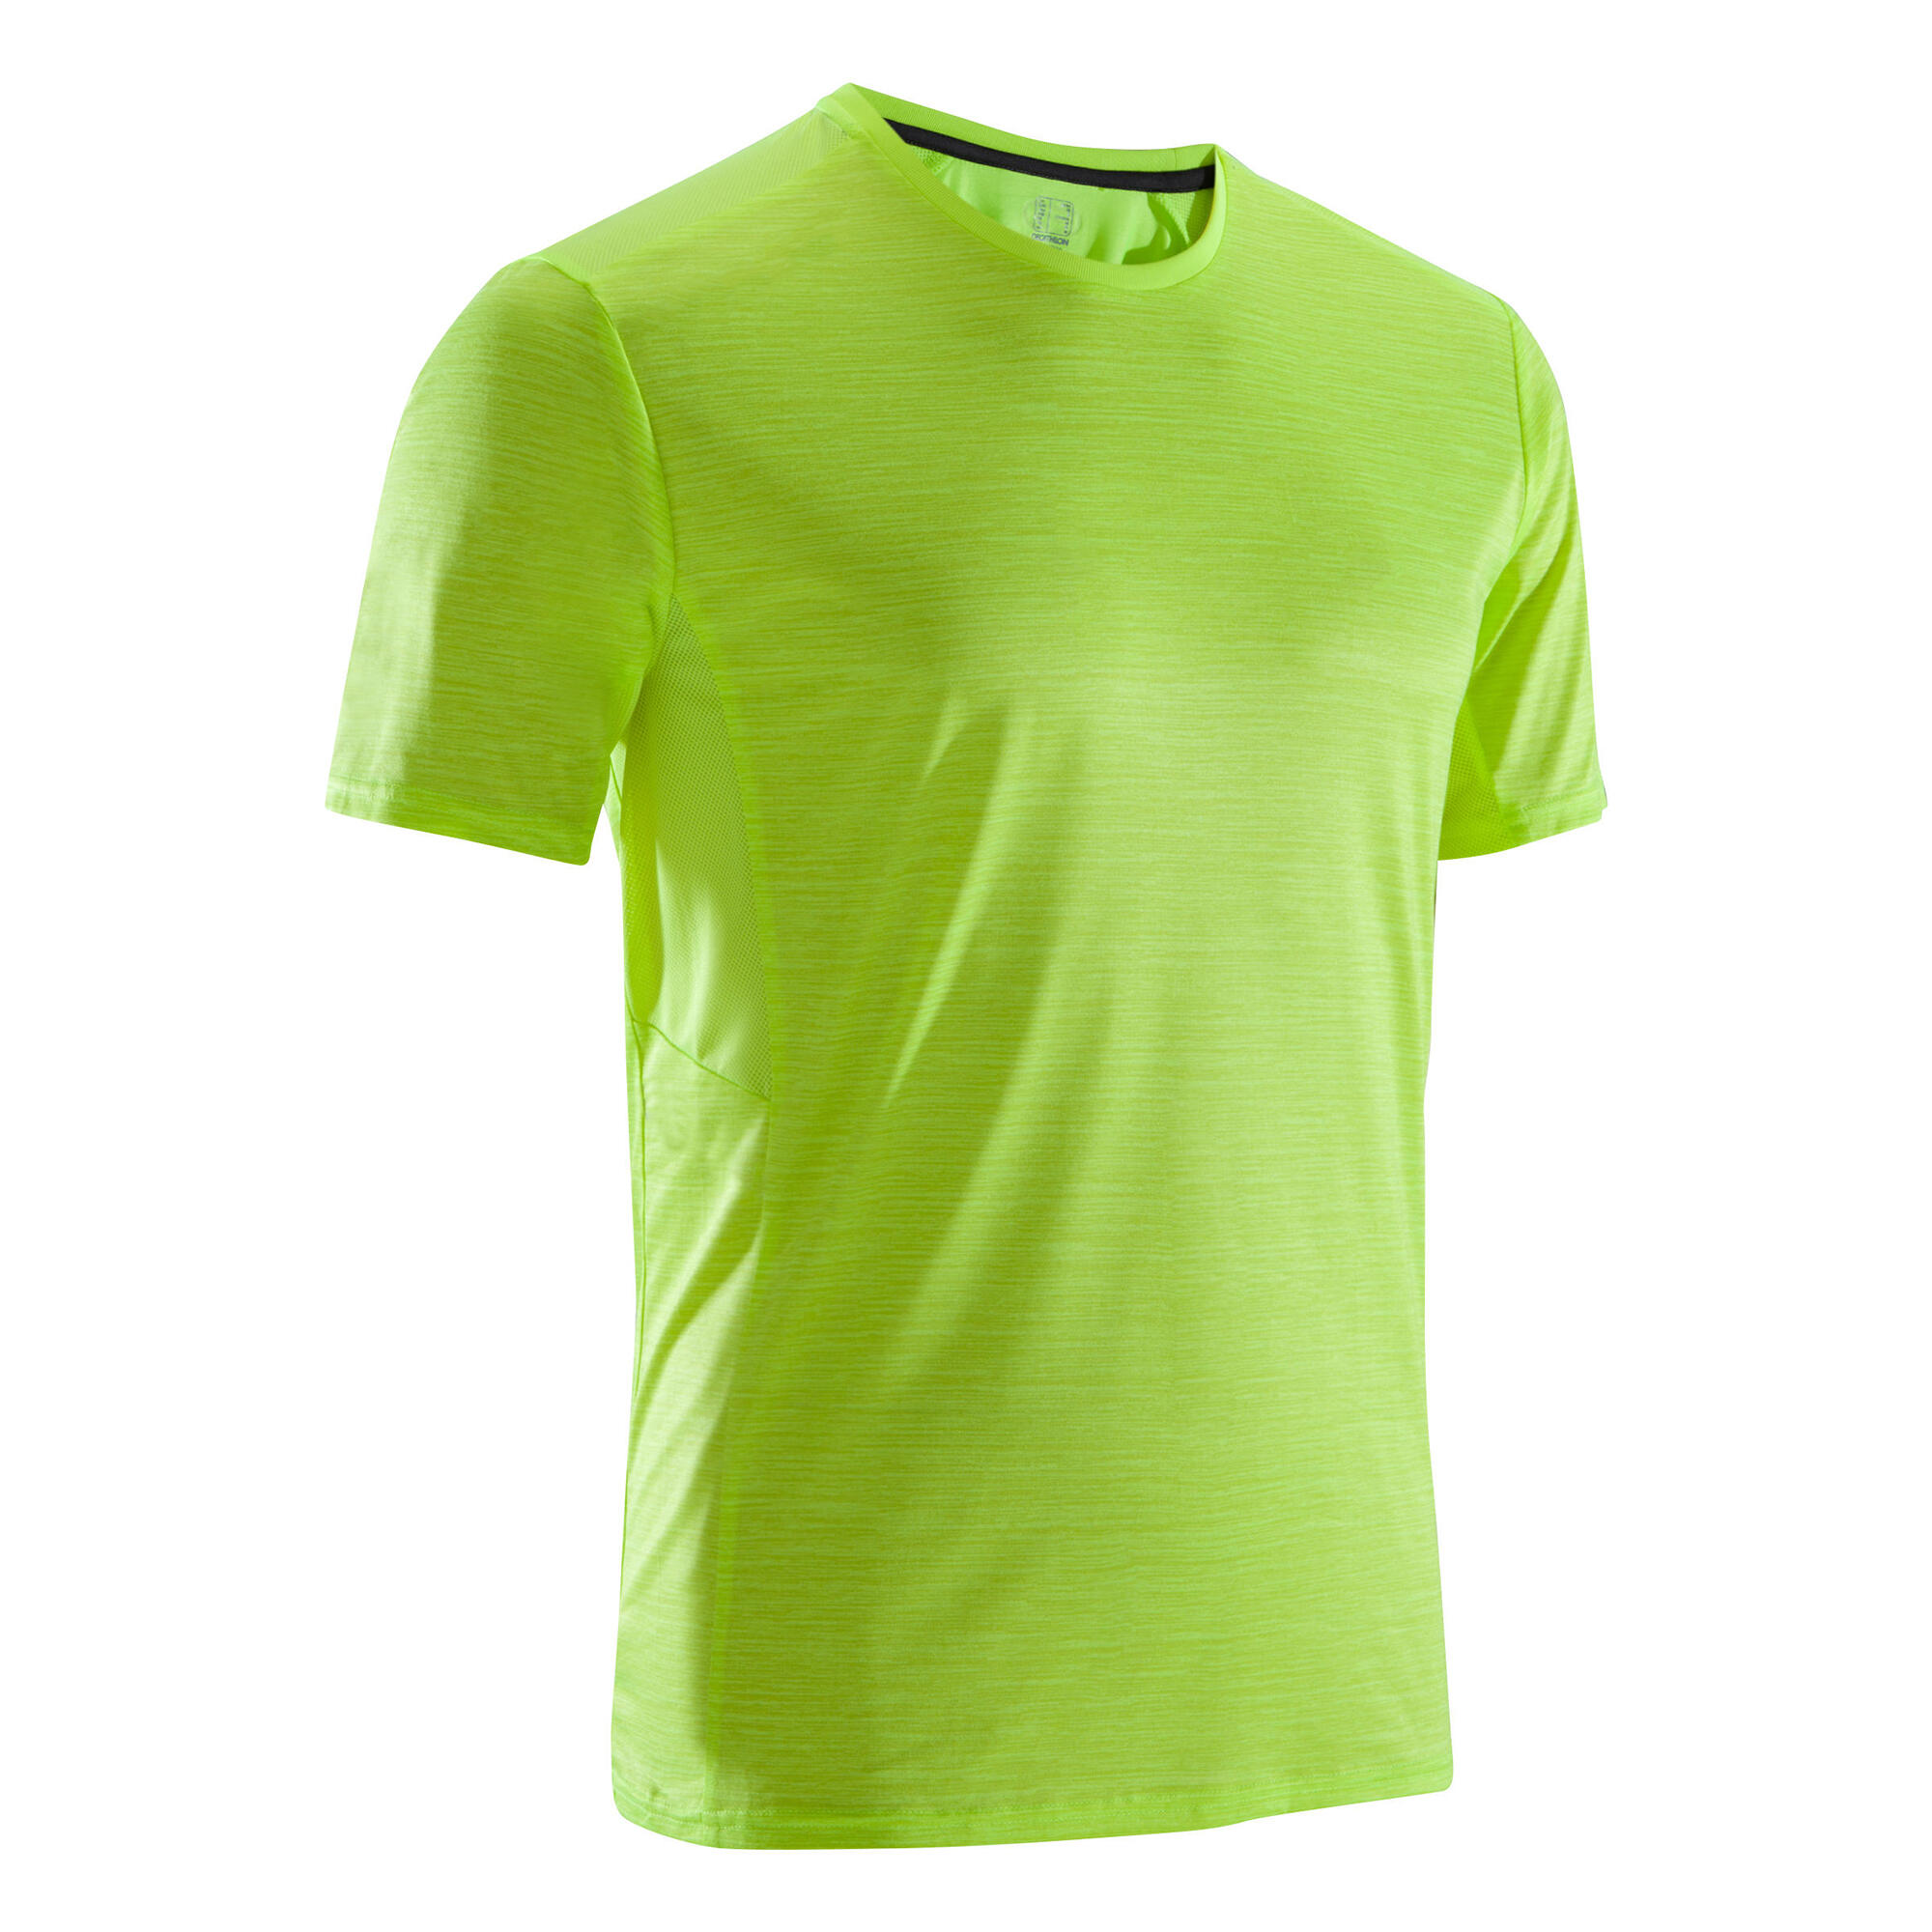 Dry+ men's breathable running T-shirt - yellow 1/1